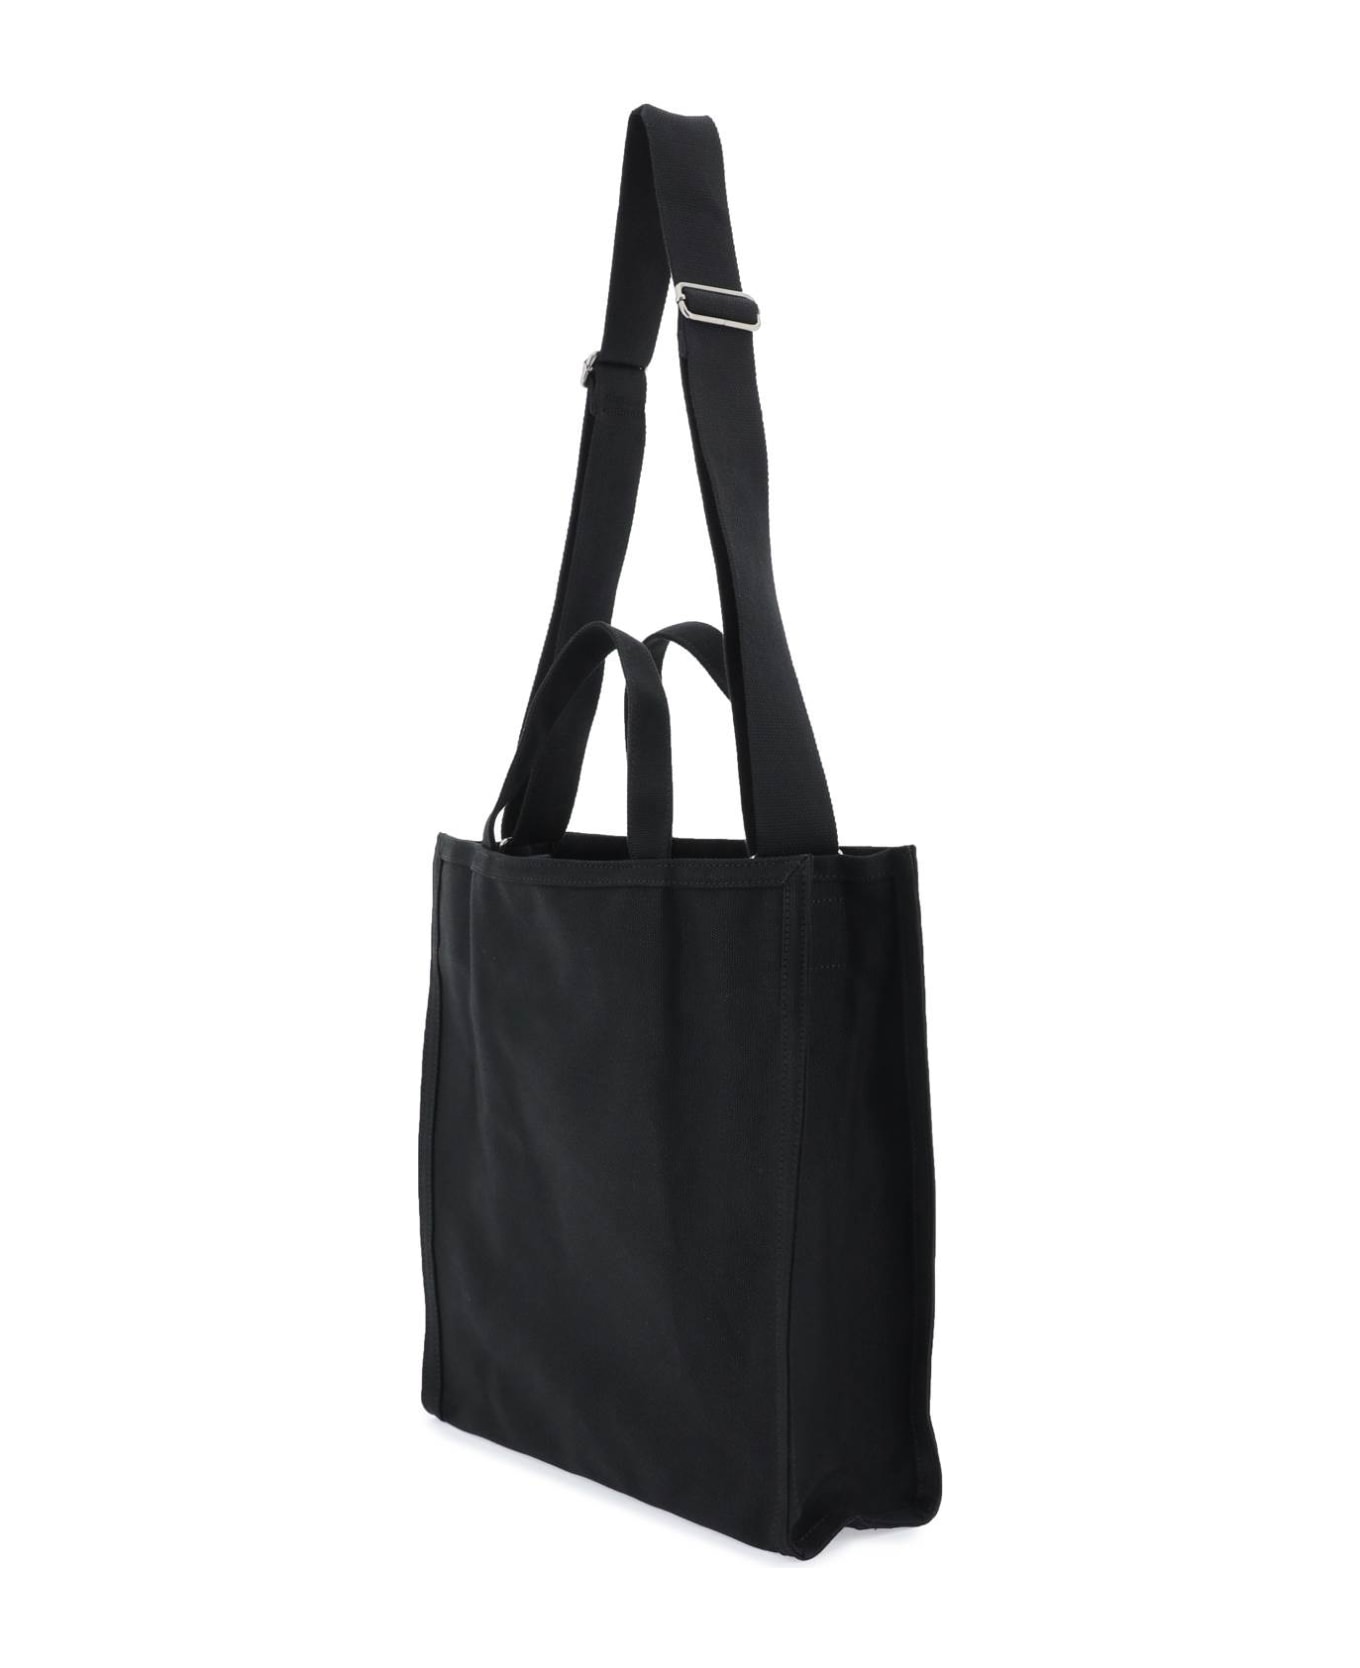 A.P.C. Recuperation Canvas Shopping Bag - NOIR (Black) トートバッグ